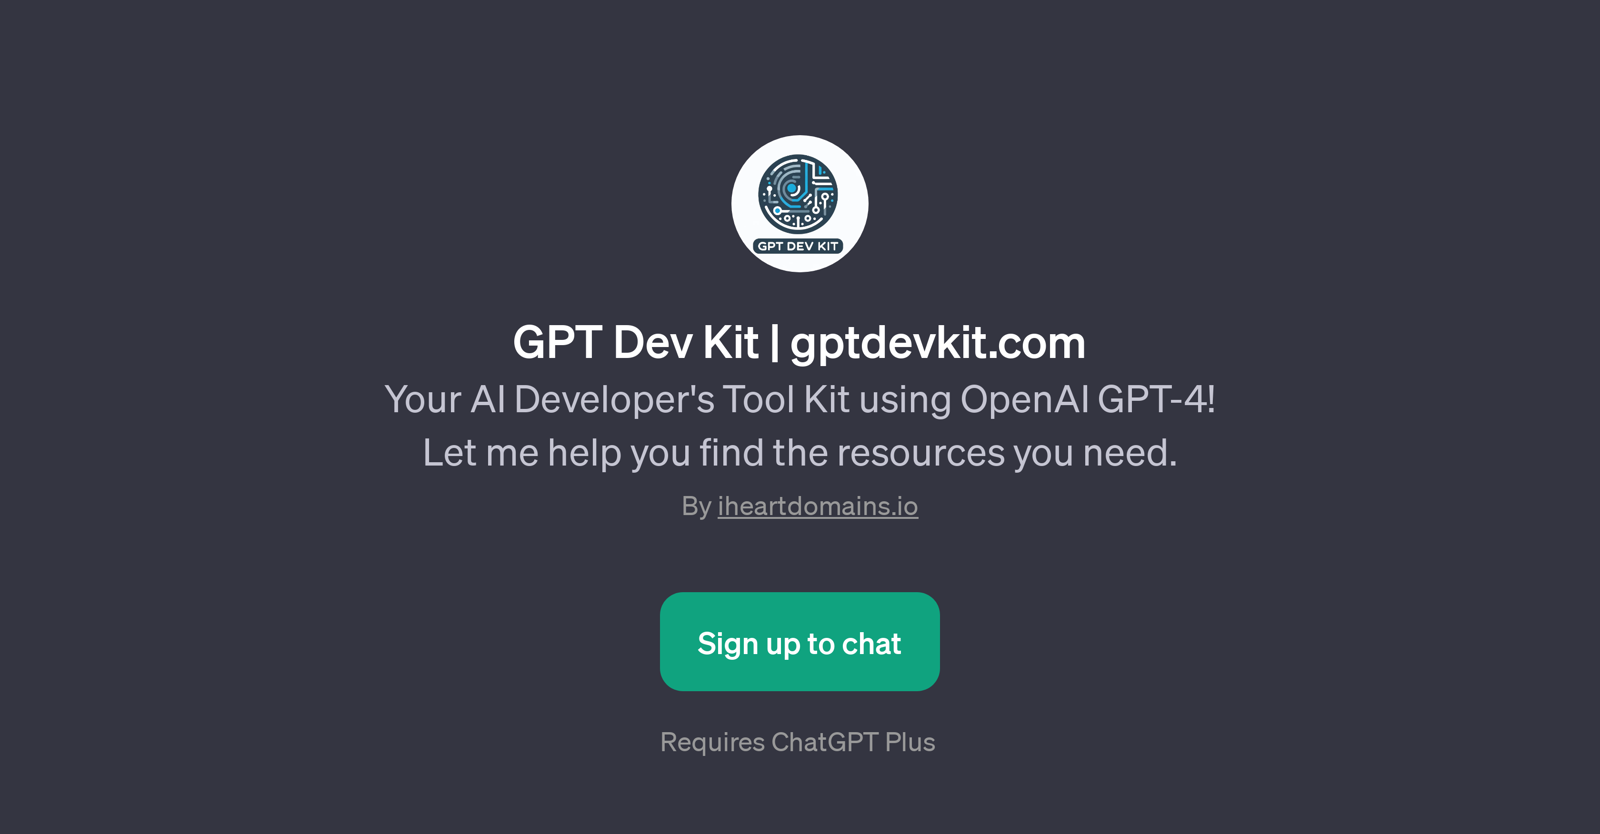 GPT Dev Kit website